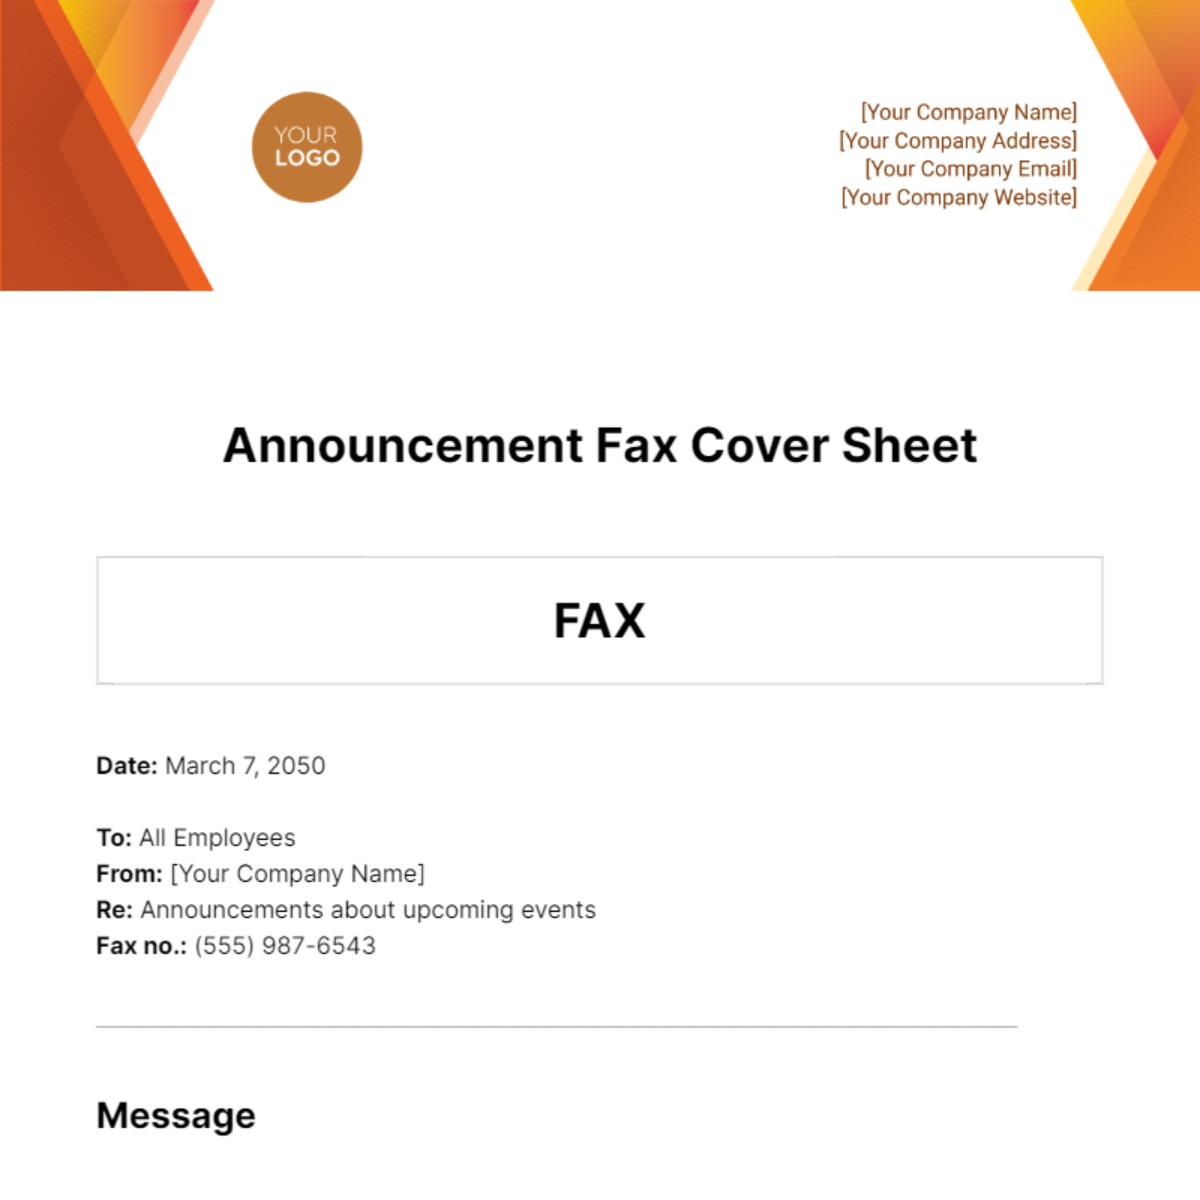 Announcement Fax Cover Sheet